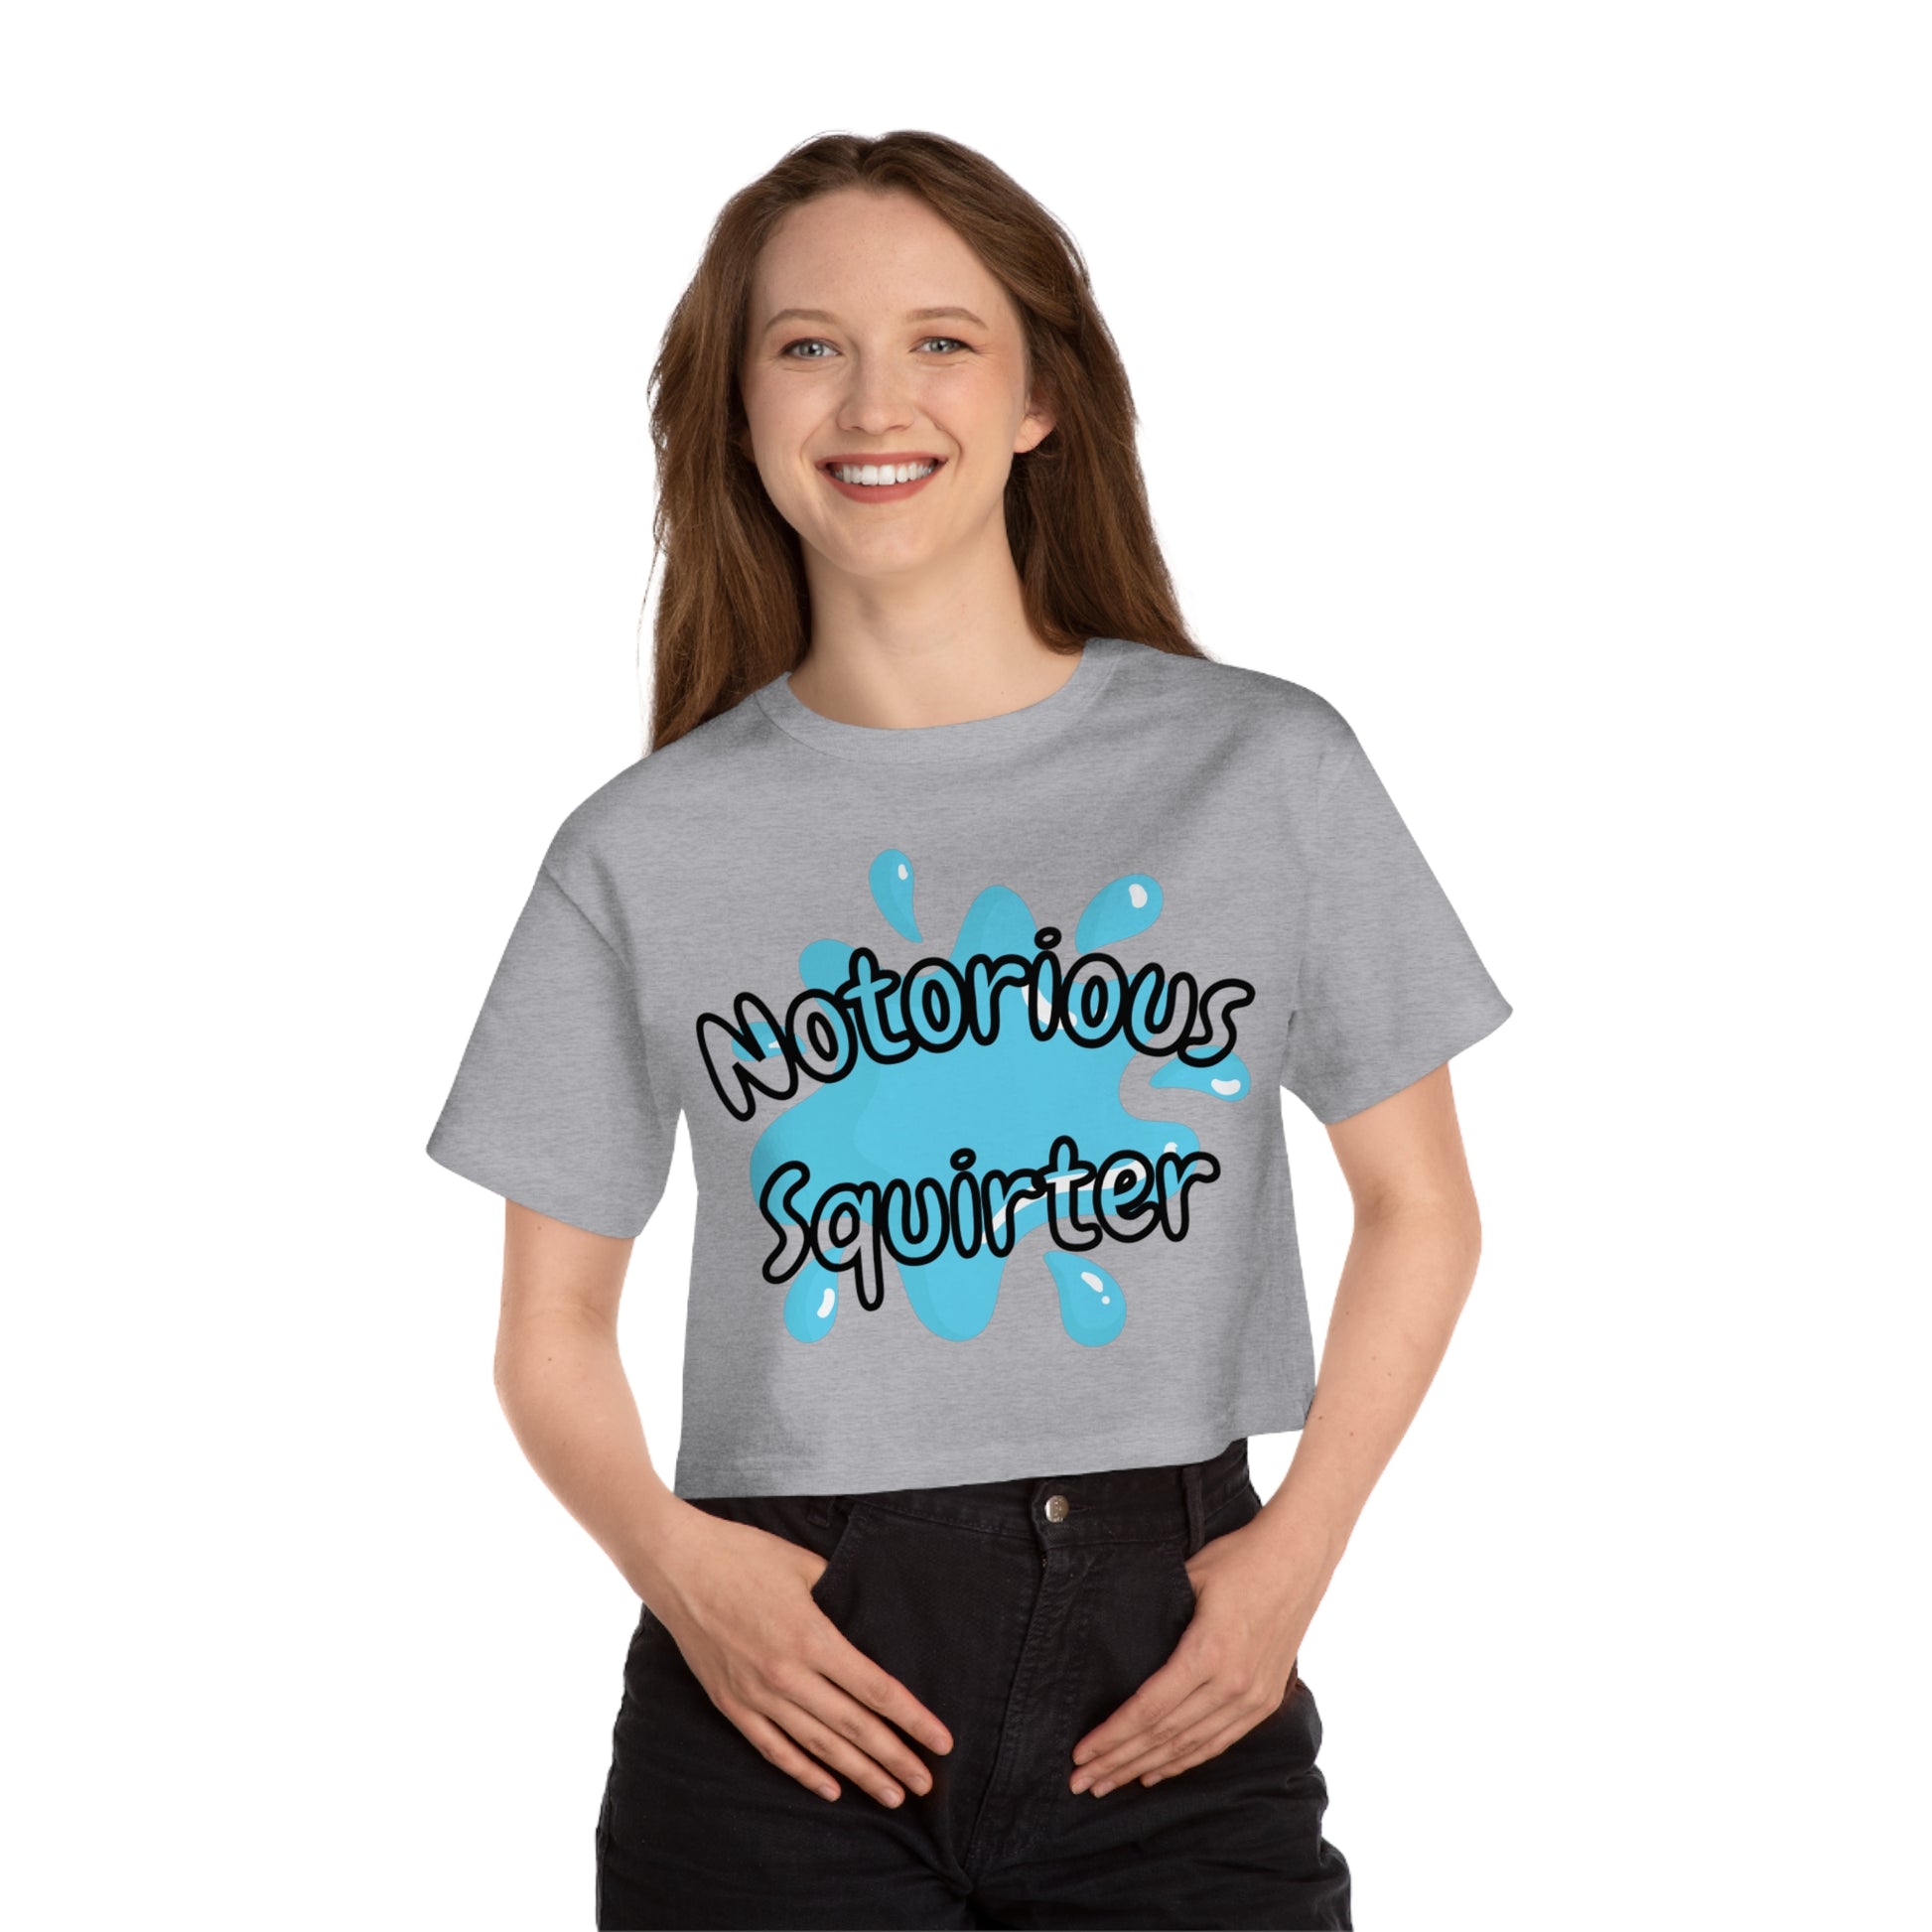 Stamina for Men Women's Notorious Squirter Cropped T-Shirt - Stamina for Men®